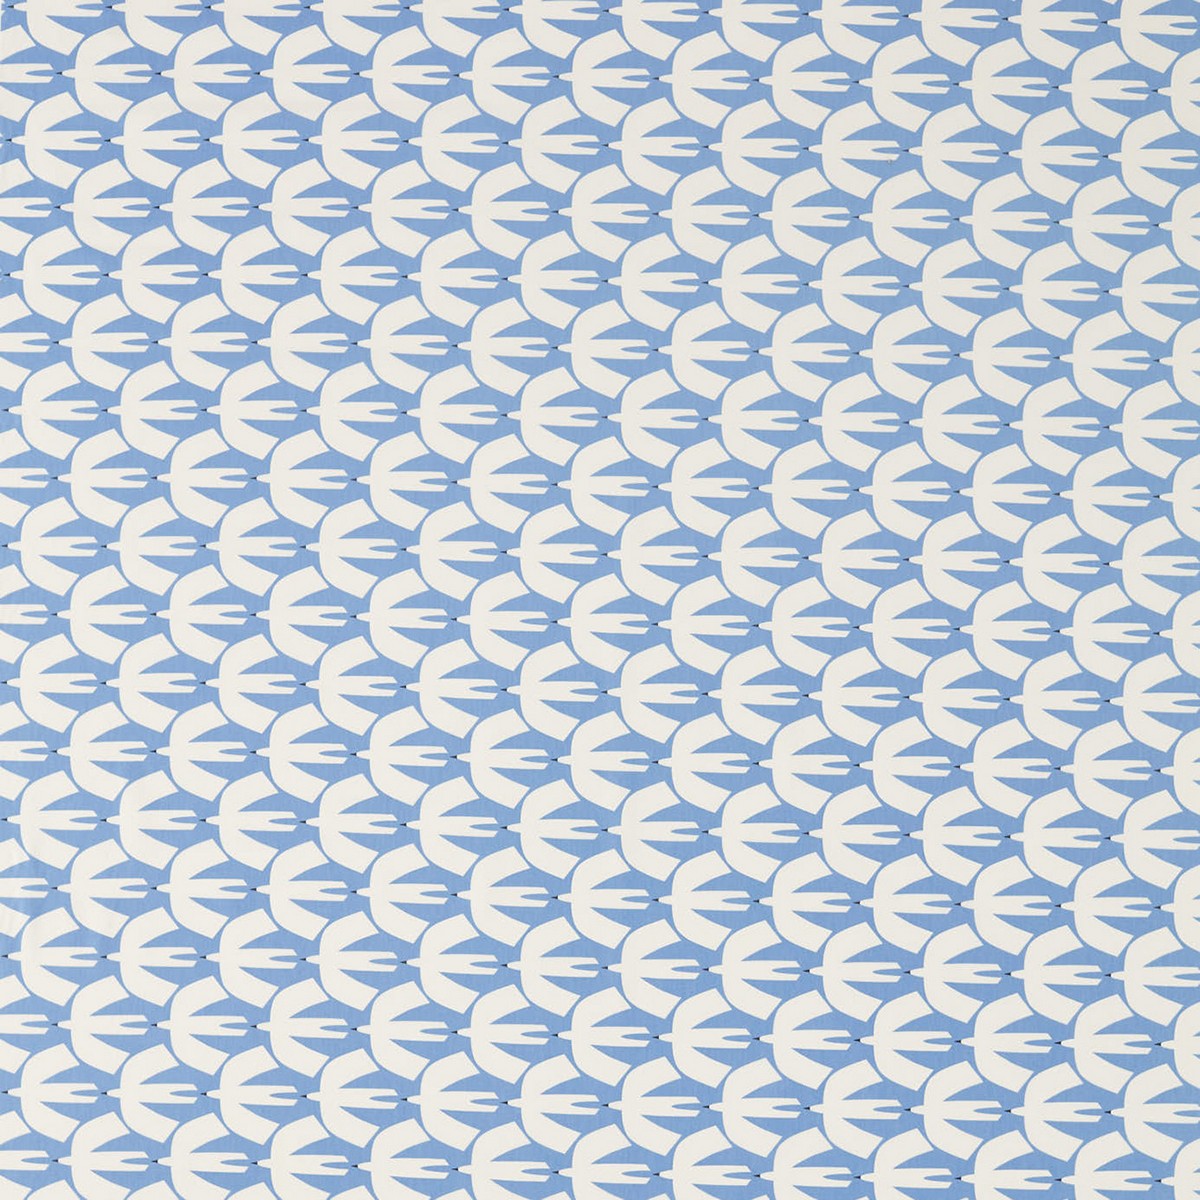 Pajaro Electric Blue Fabric by Scion